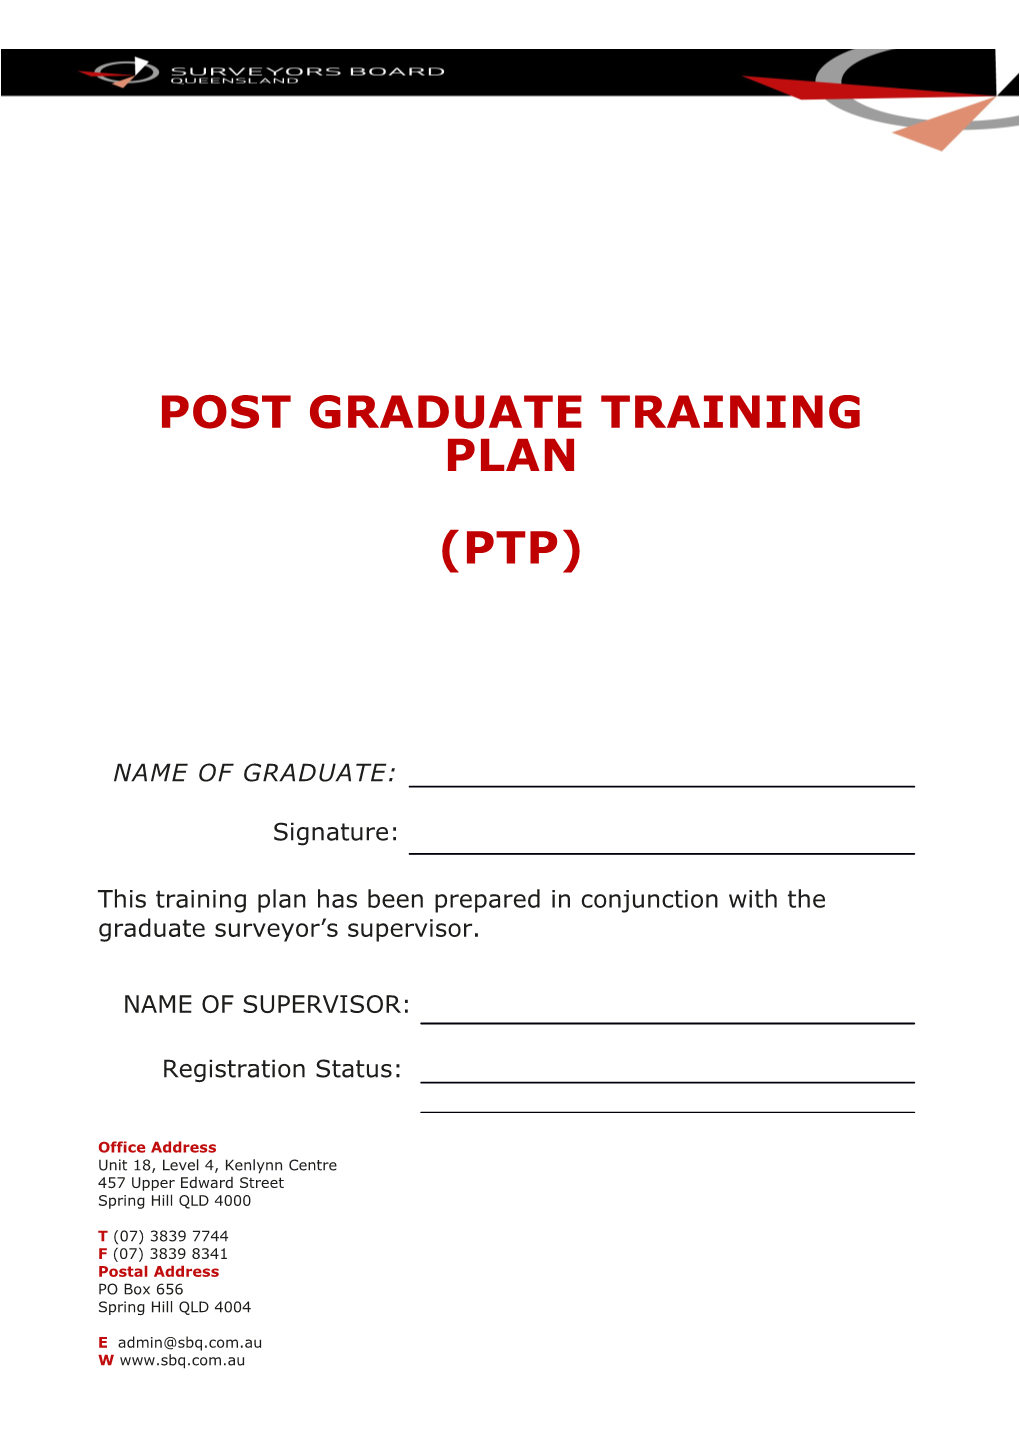 Post Graduate Training Plan